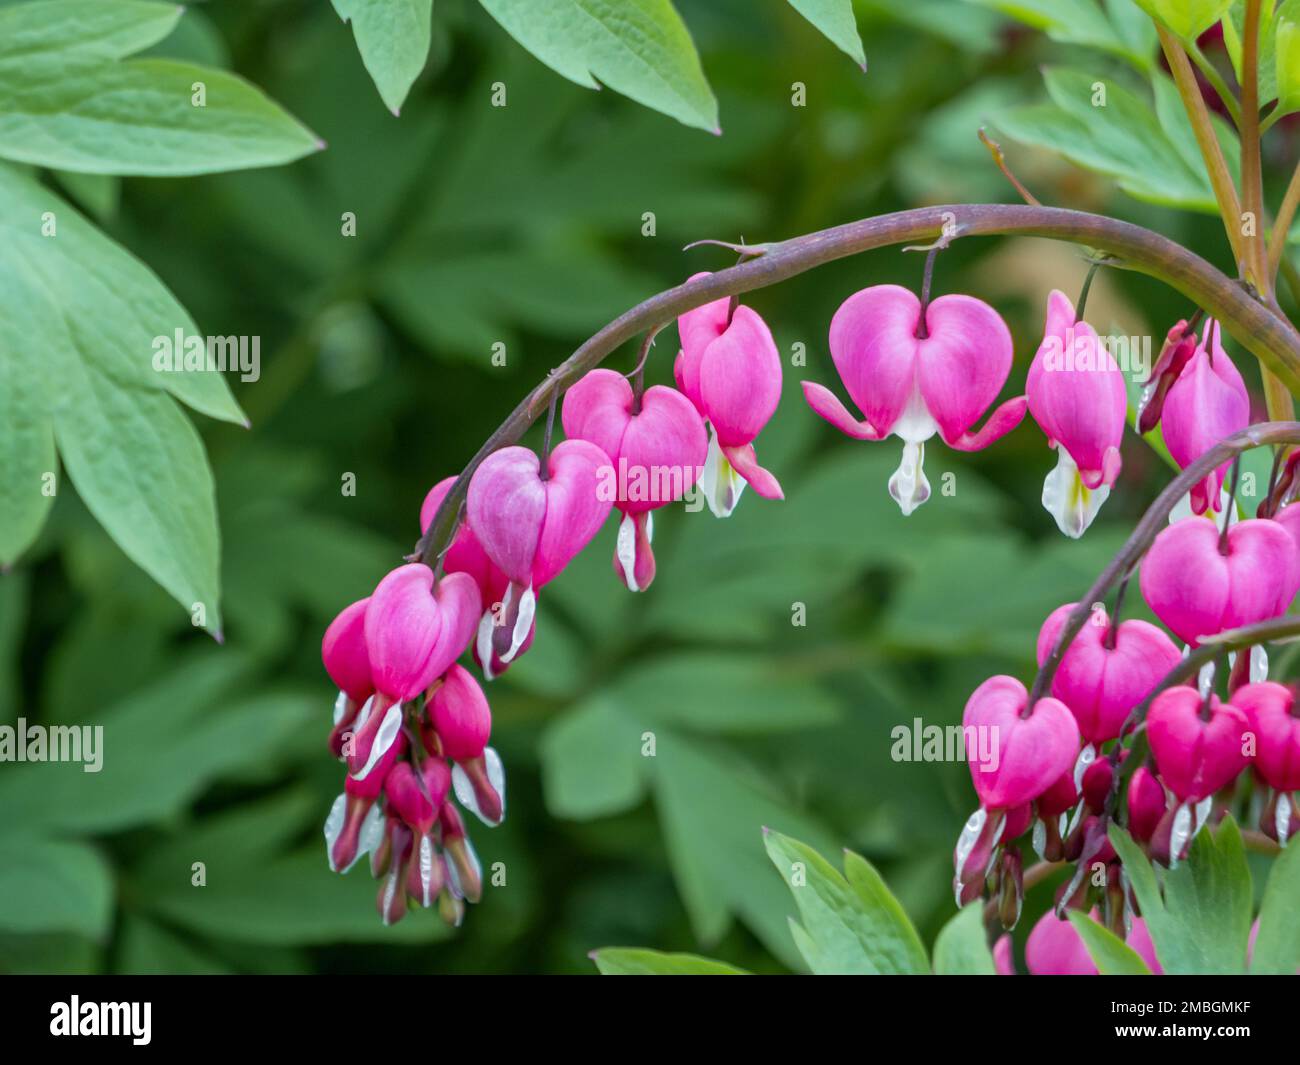 Flowering plant Lamprocapnos spectabilis, bleeding heart, fallopian buds or Asian bleeding-heart. Bright pink flowers in bloom. Summer natural backgro Stock Photo